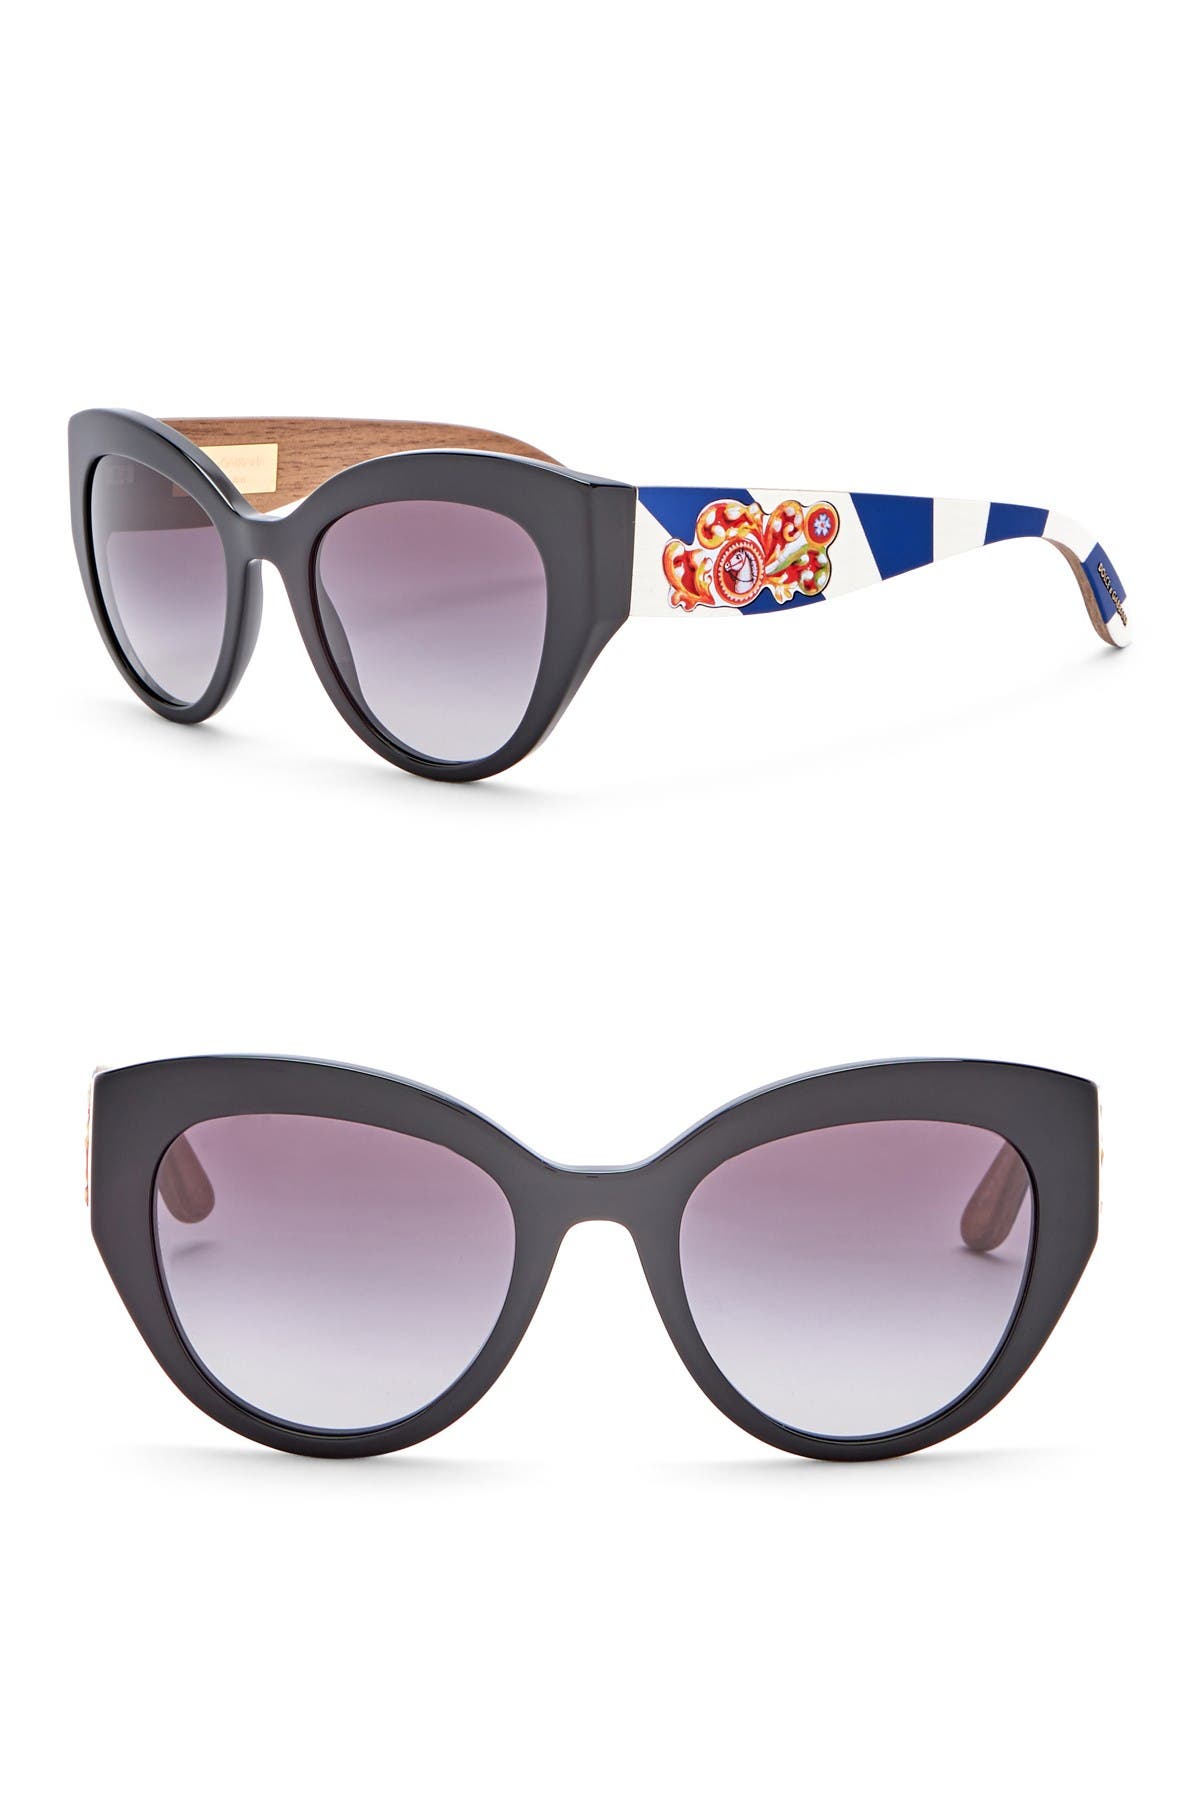 dolce & gabbana 52mm cat eye sunglasses